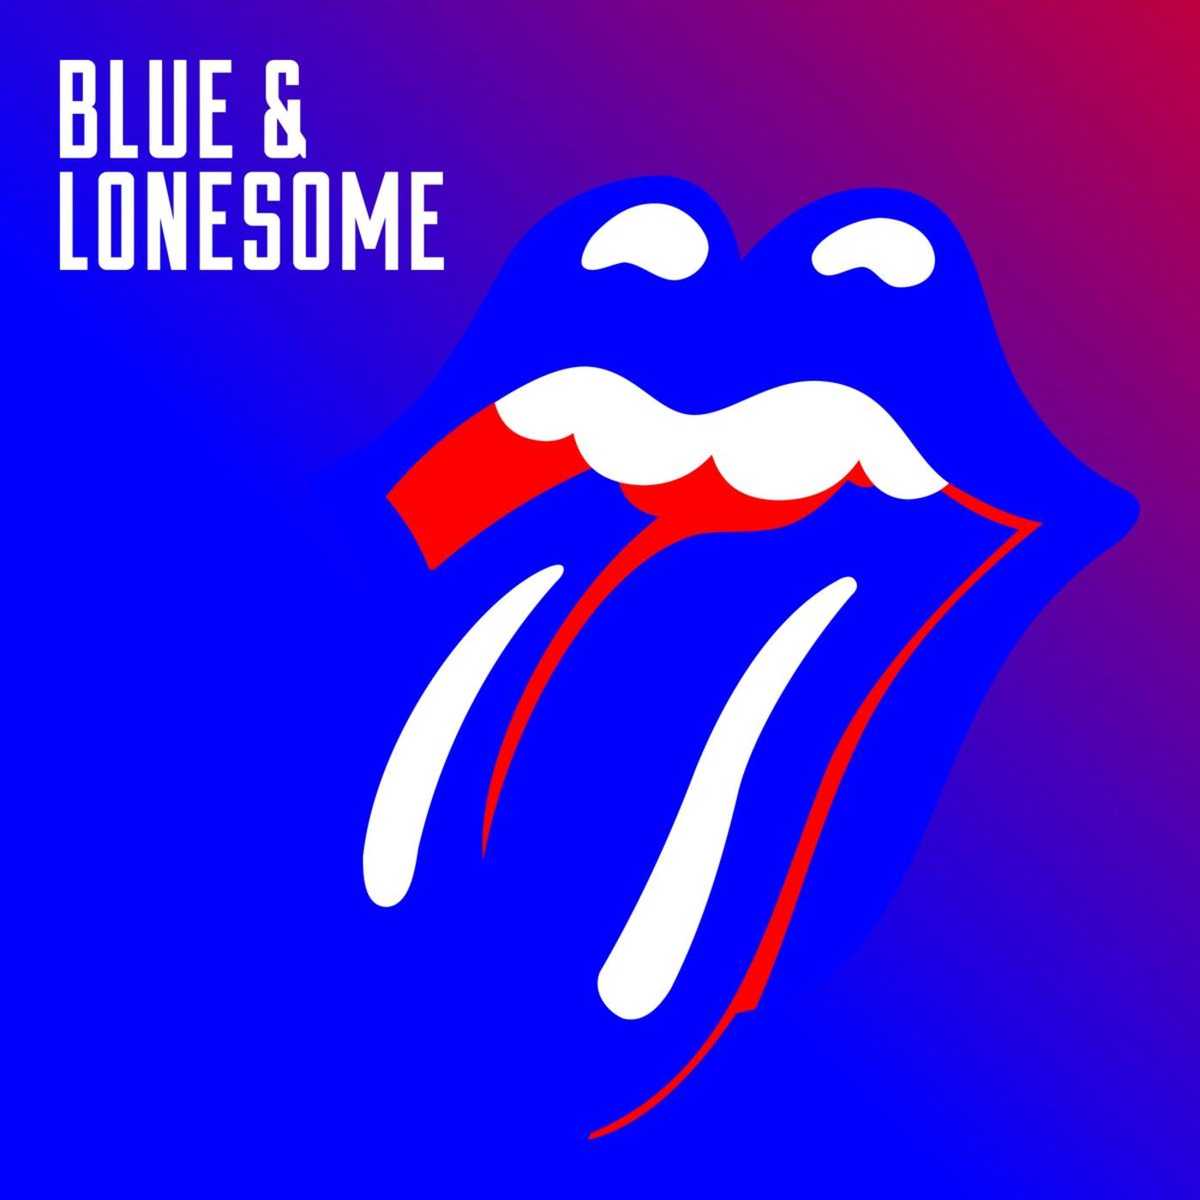 RollingStonesBlueLonesome2016